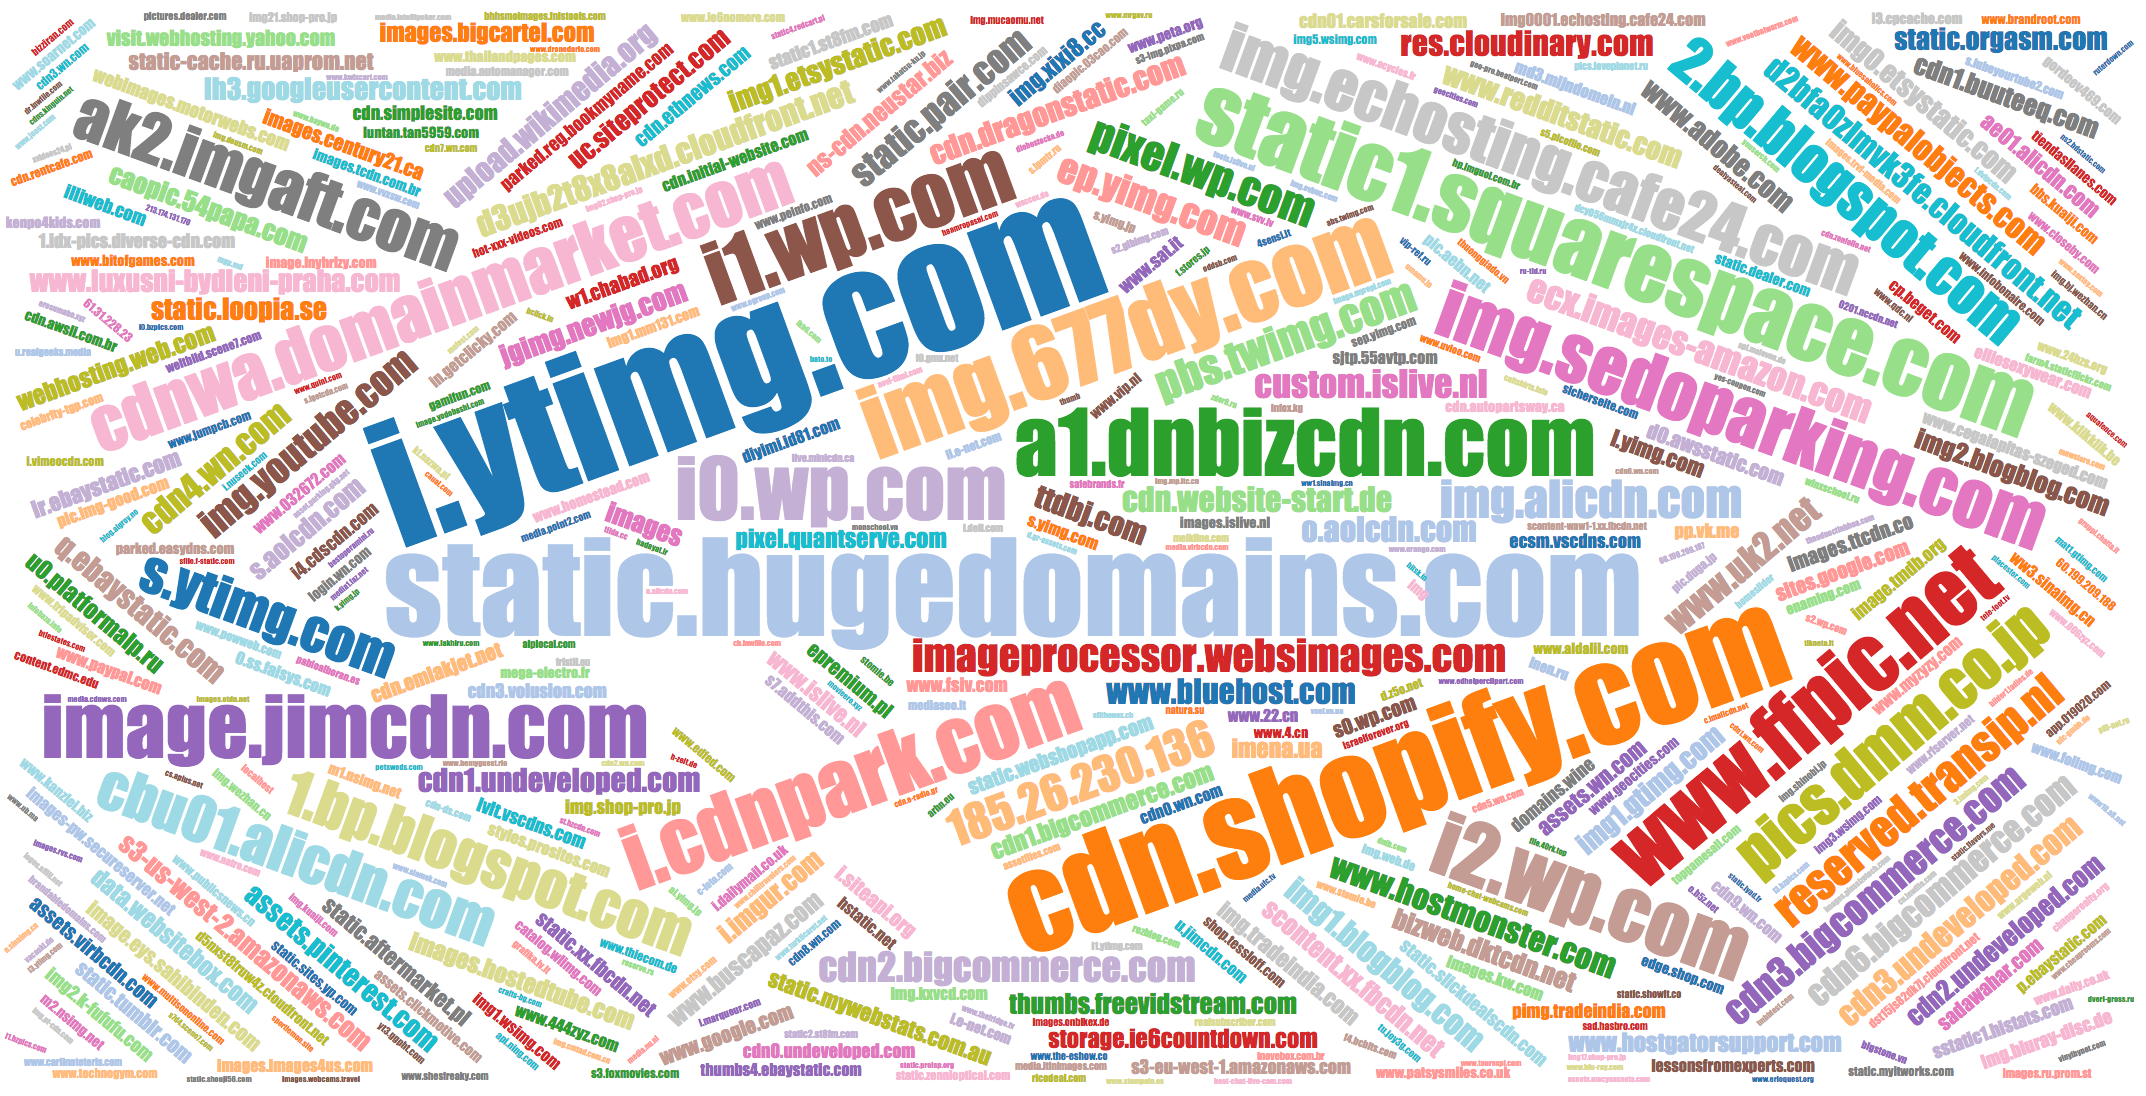 Popular names of IMG domains cdn1.undeveloped.com, cbu01.alicdn.com, etc.